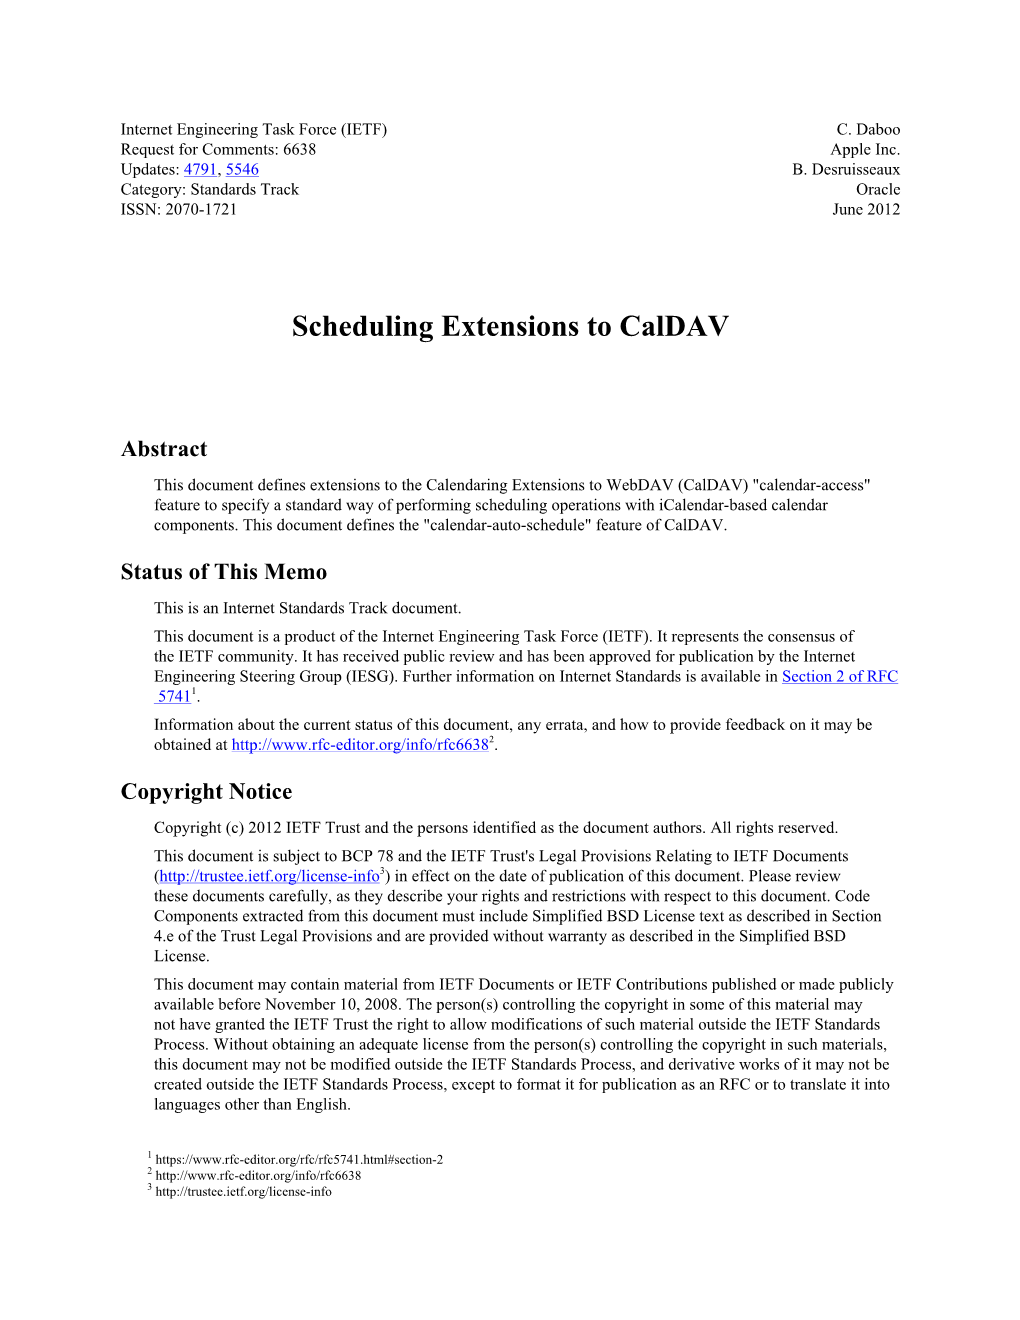 Scheduling Extensions to Caldav